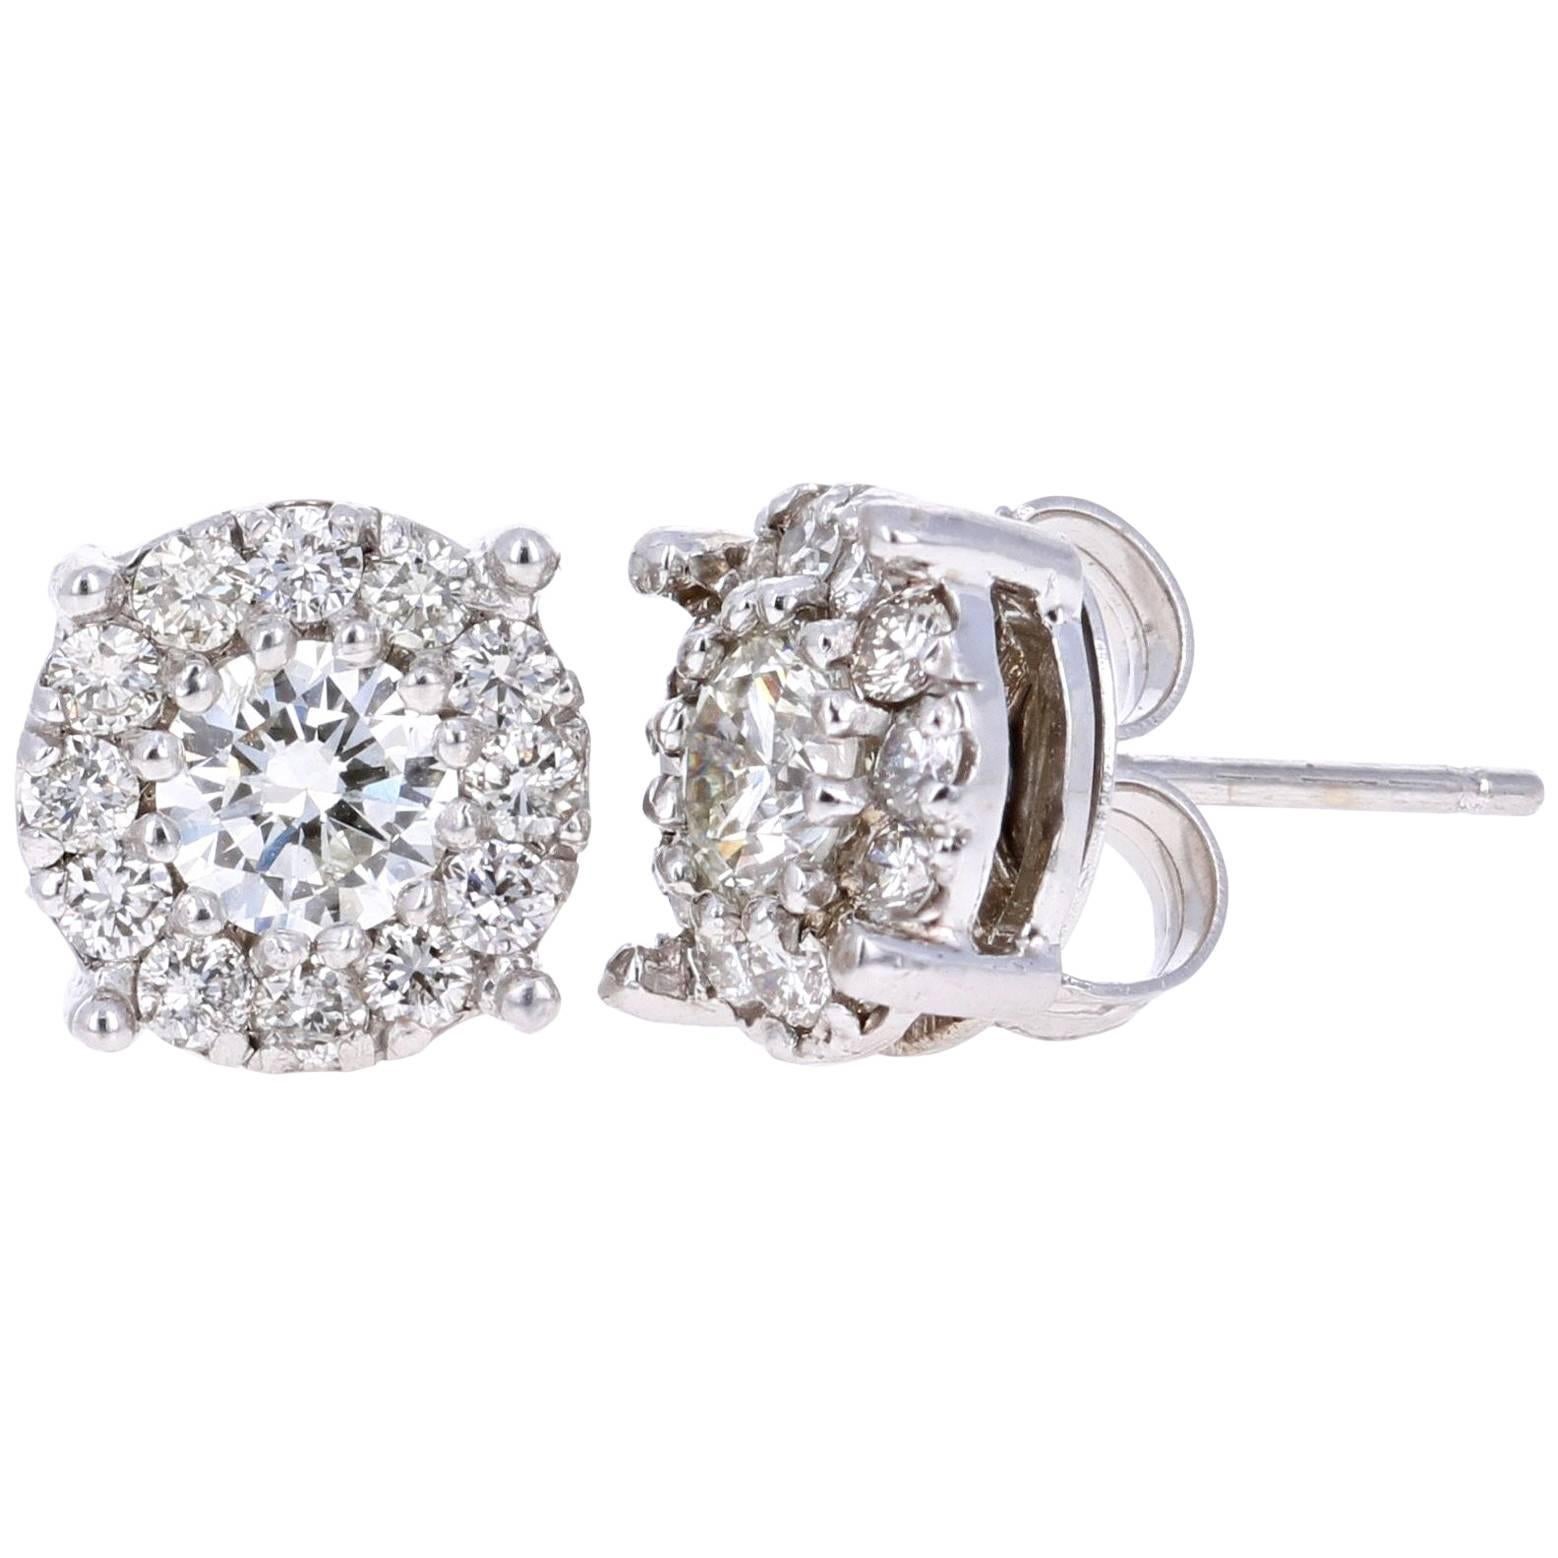 1.36 Carat Round Diamond Floret Design 14 Karat White Gold Stud Earrings